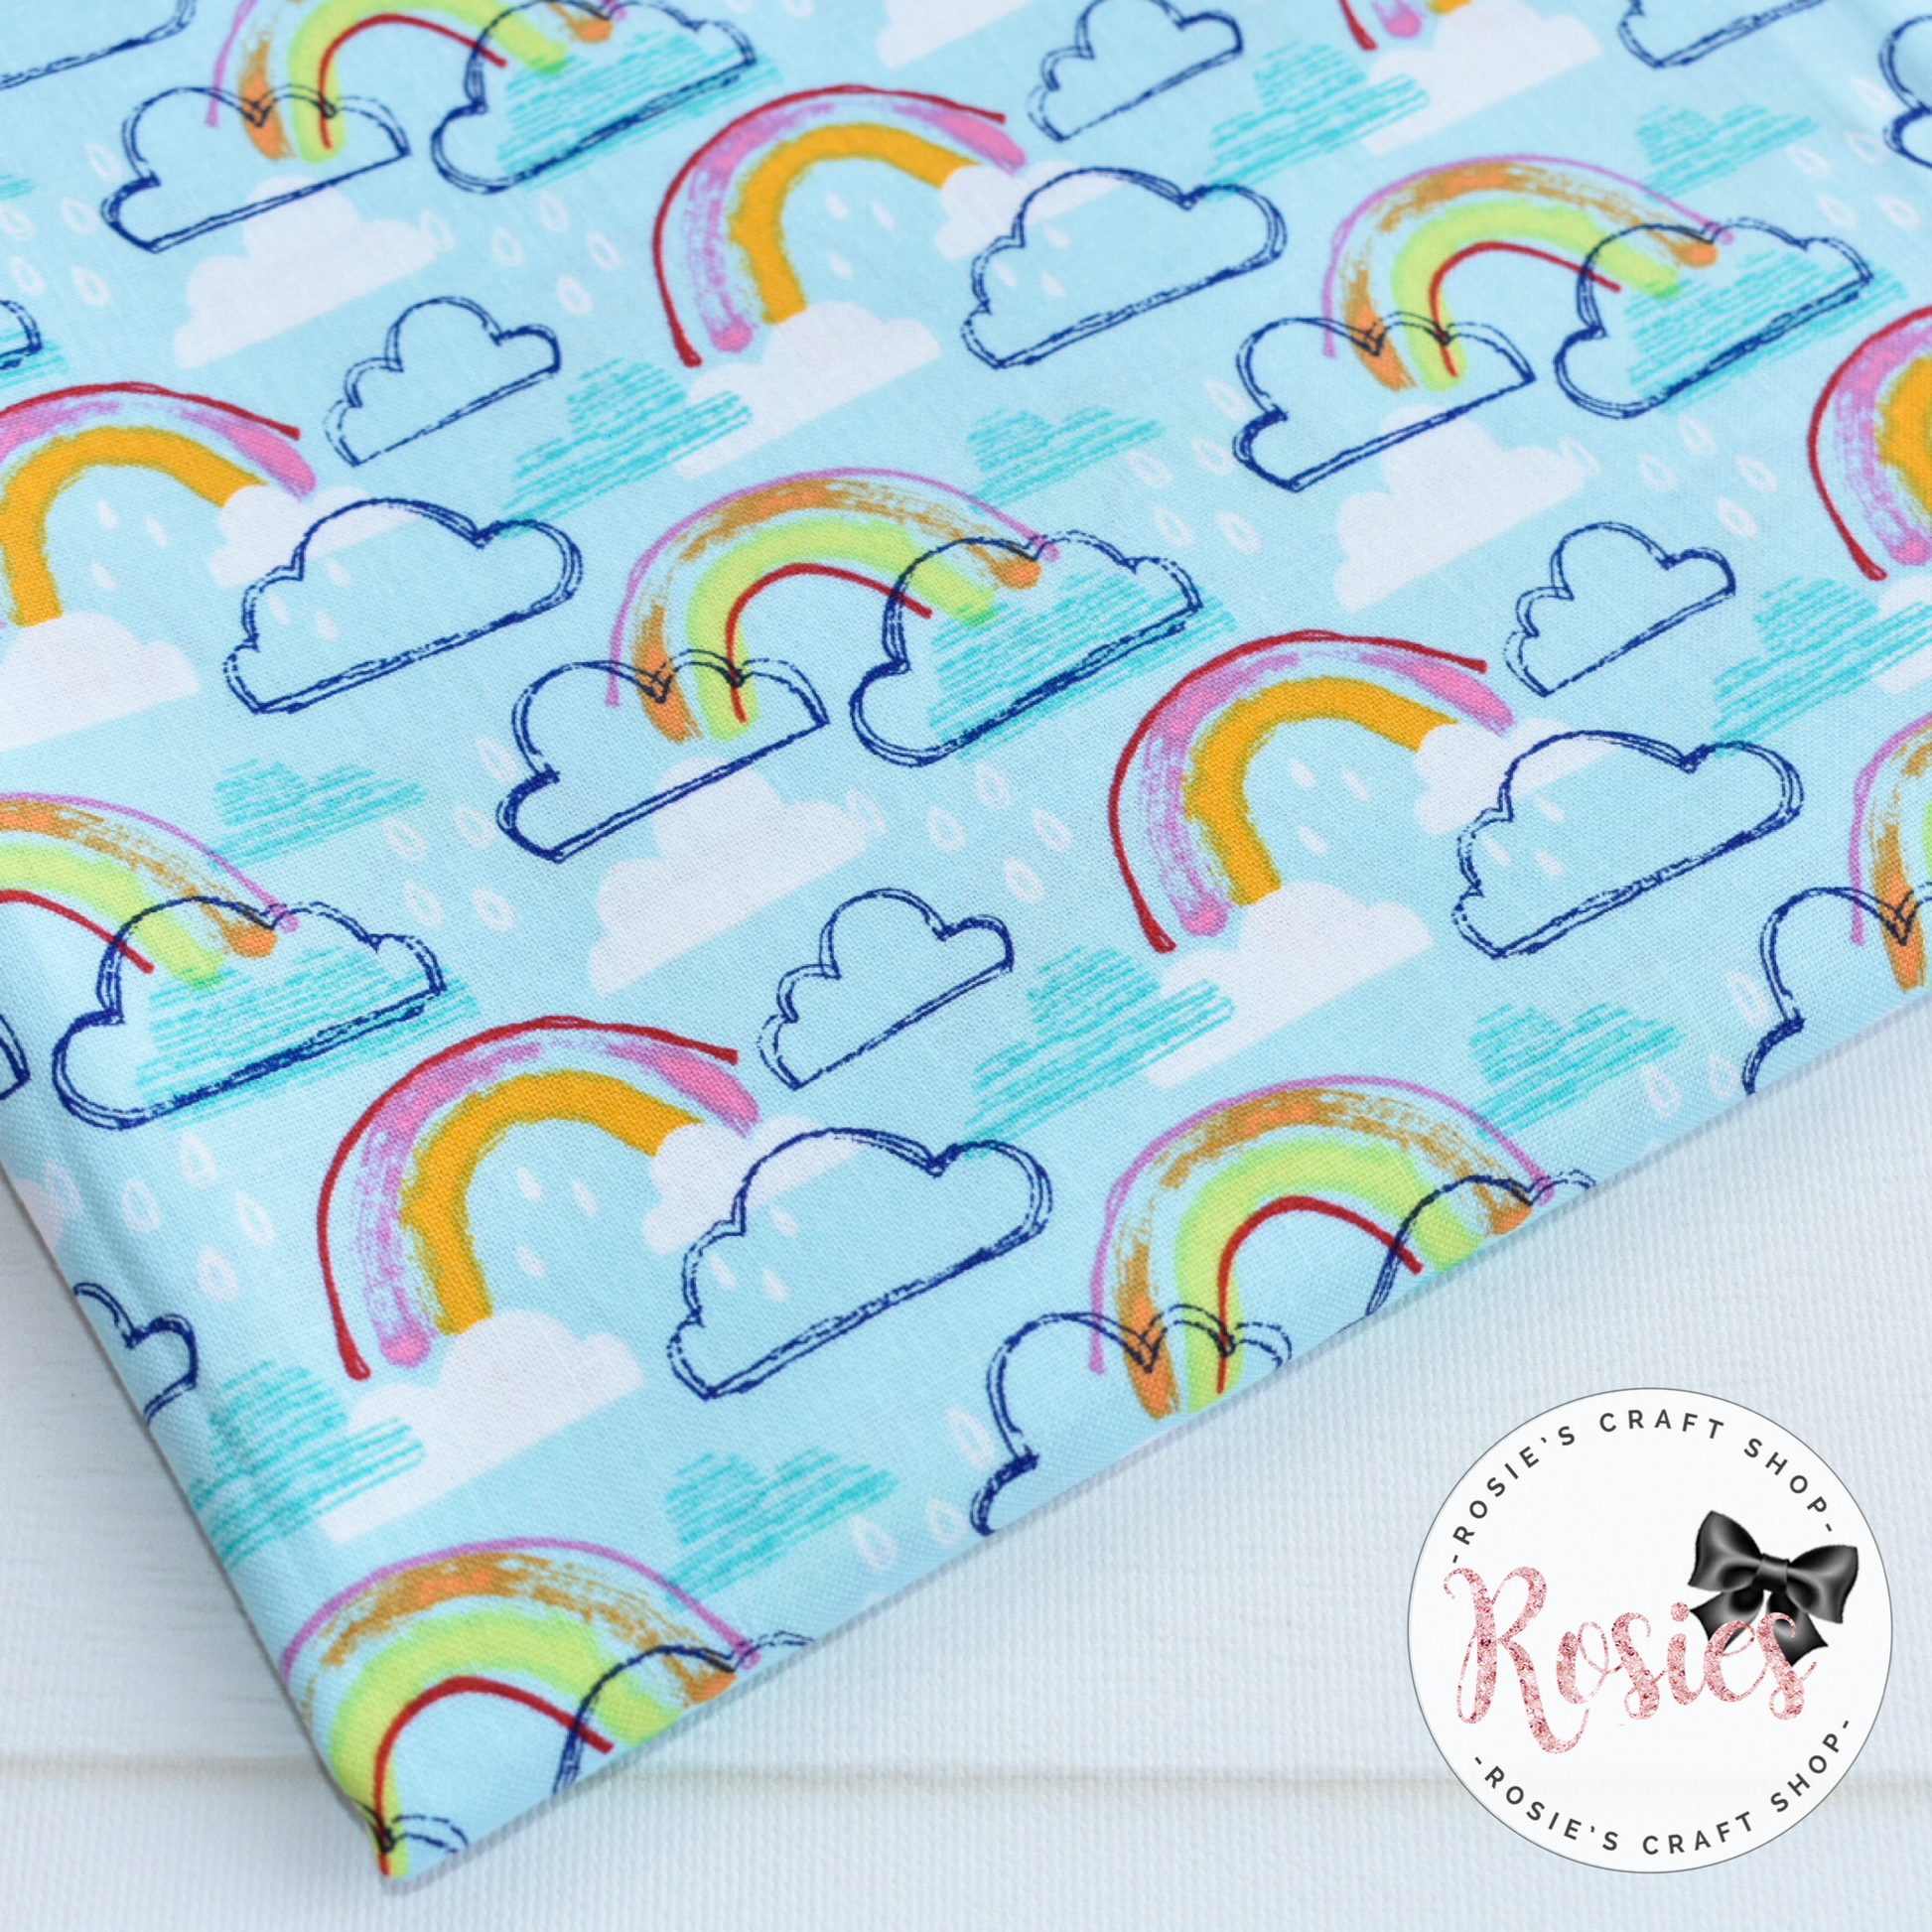 Rainbow Jubilee Designer  Fabric Felt - Rosie's Craft Shop Ltd